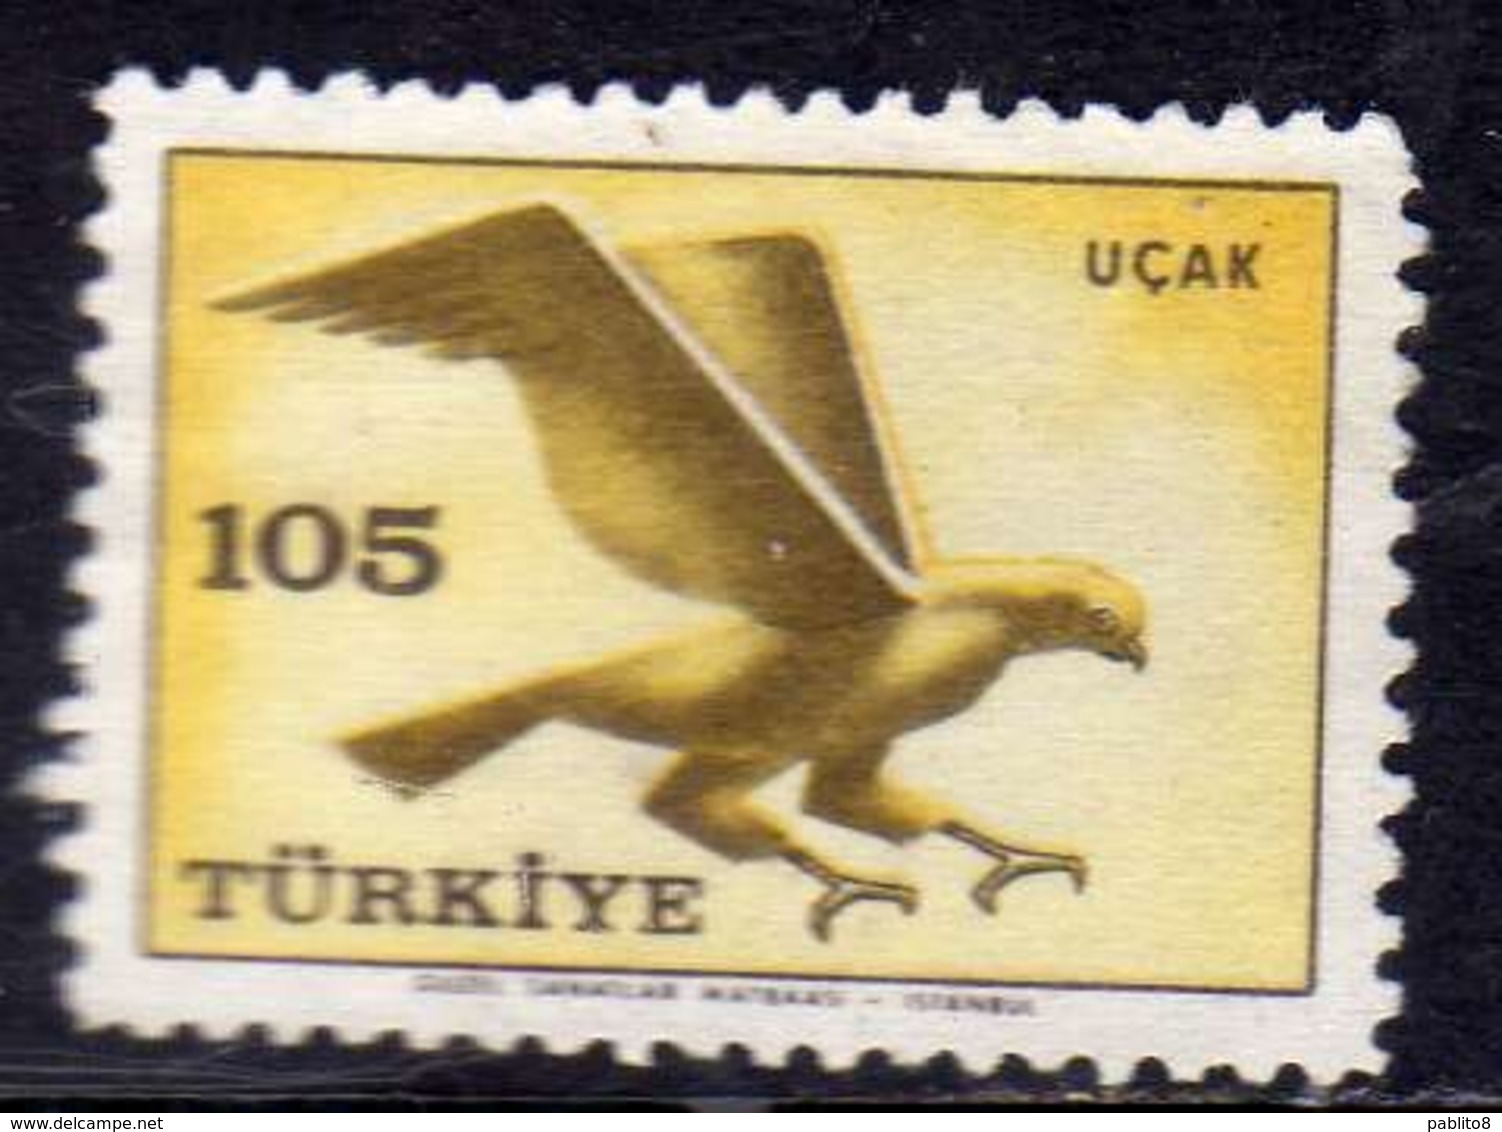 TURCHIA TURKÍA TURKEY 1959 AIR MAIL POSTA AEREA BIRD FAUNA AVICOLA HAWK FALCO 105k MNH - Luftpost